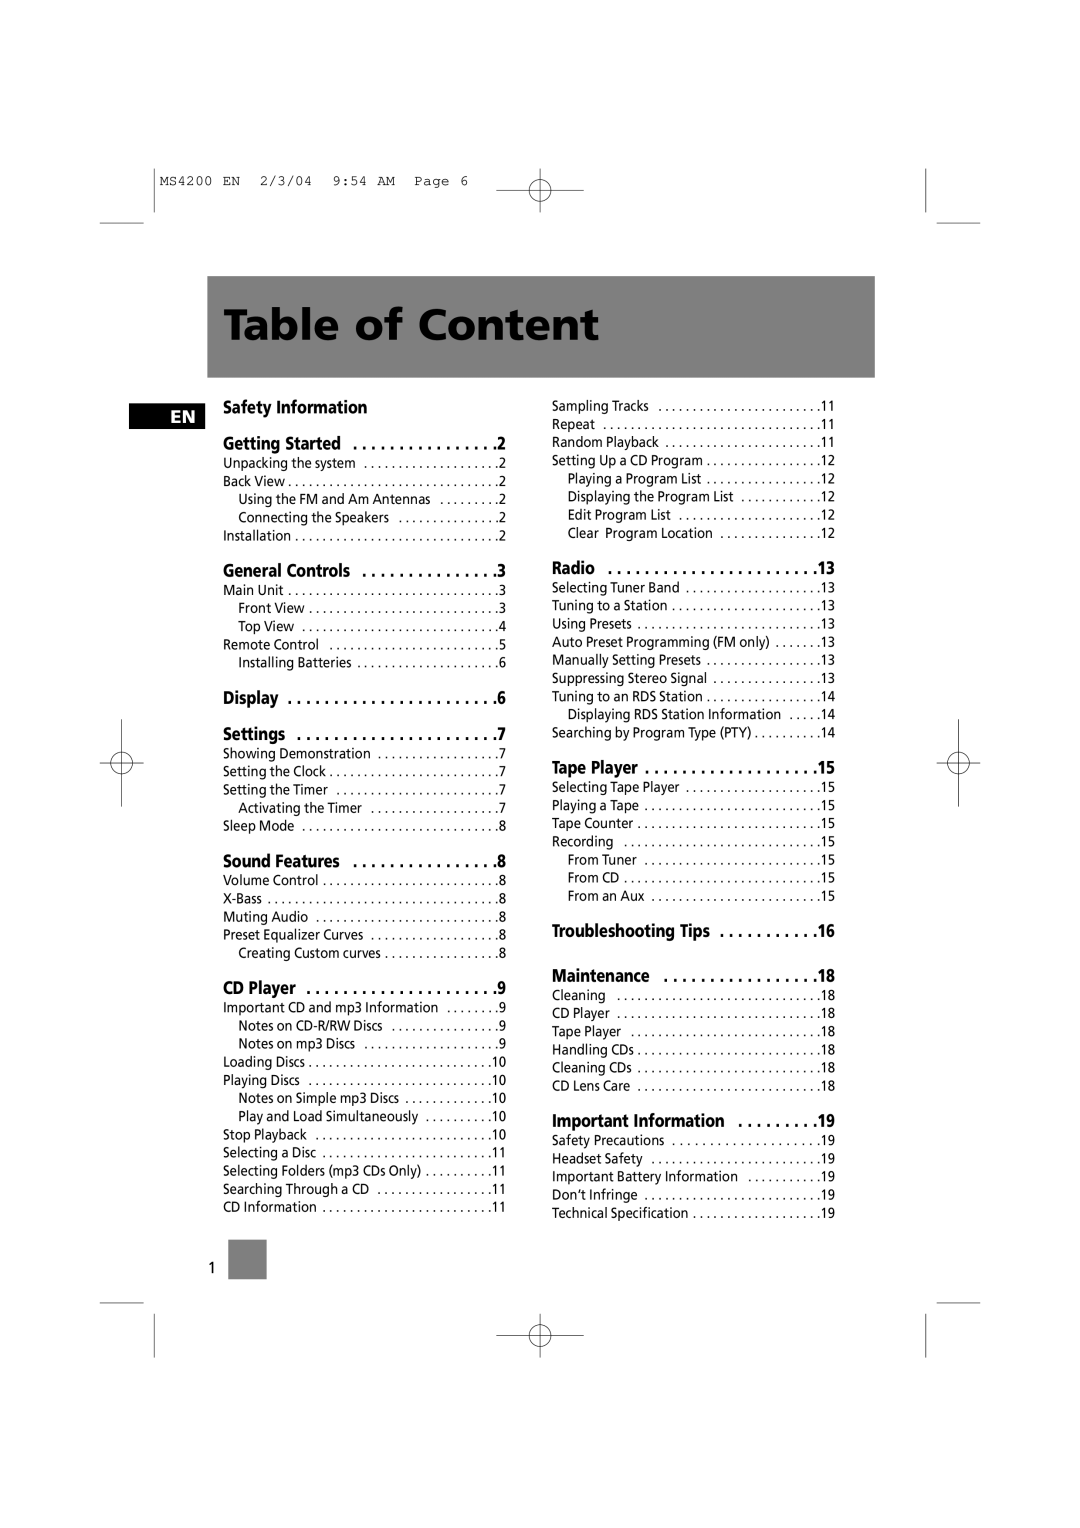 Technicolor - Thomson MS4200 manual Table of Content 